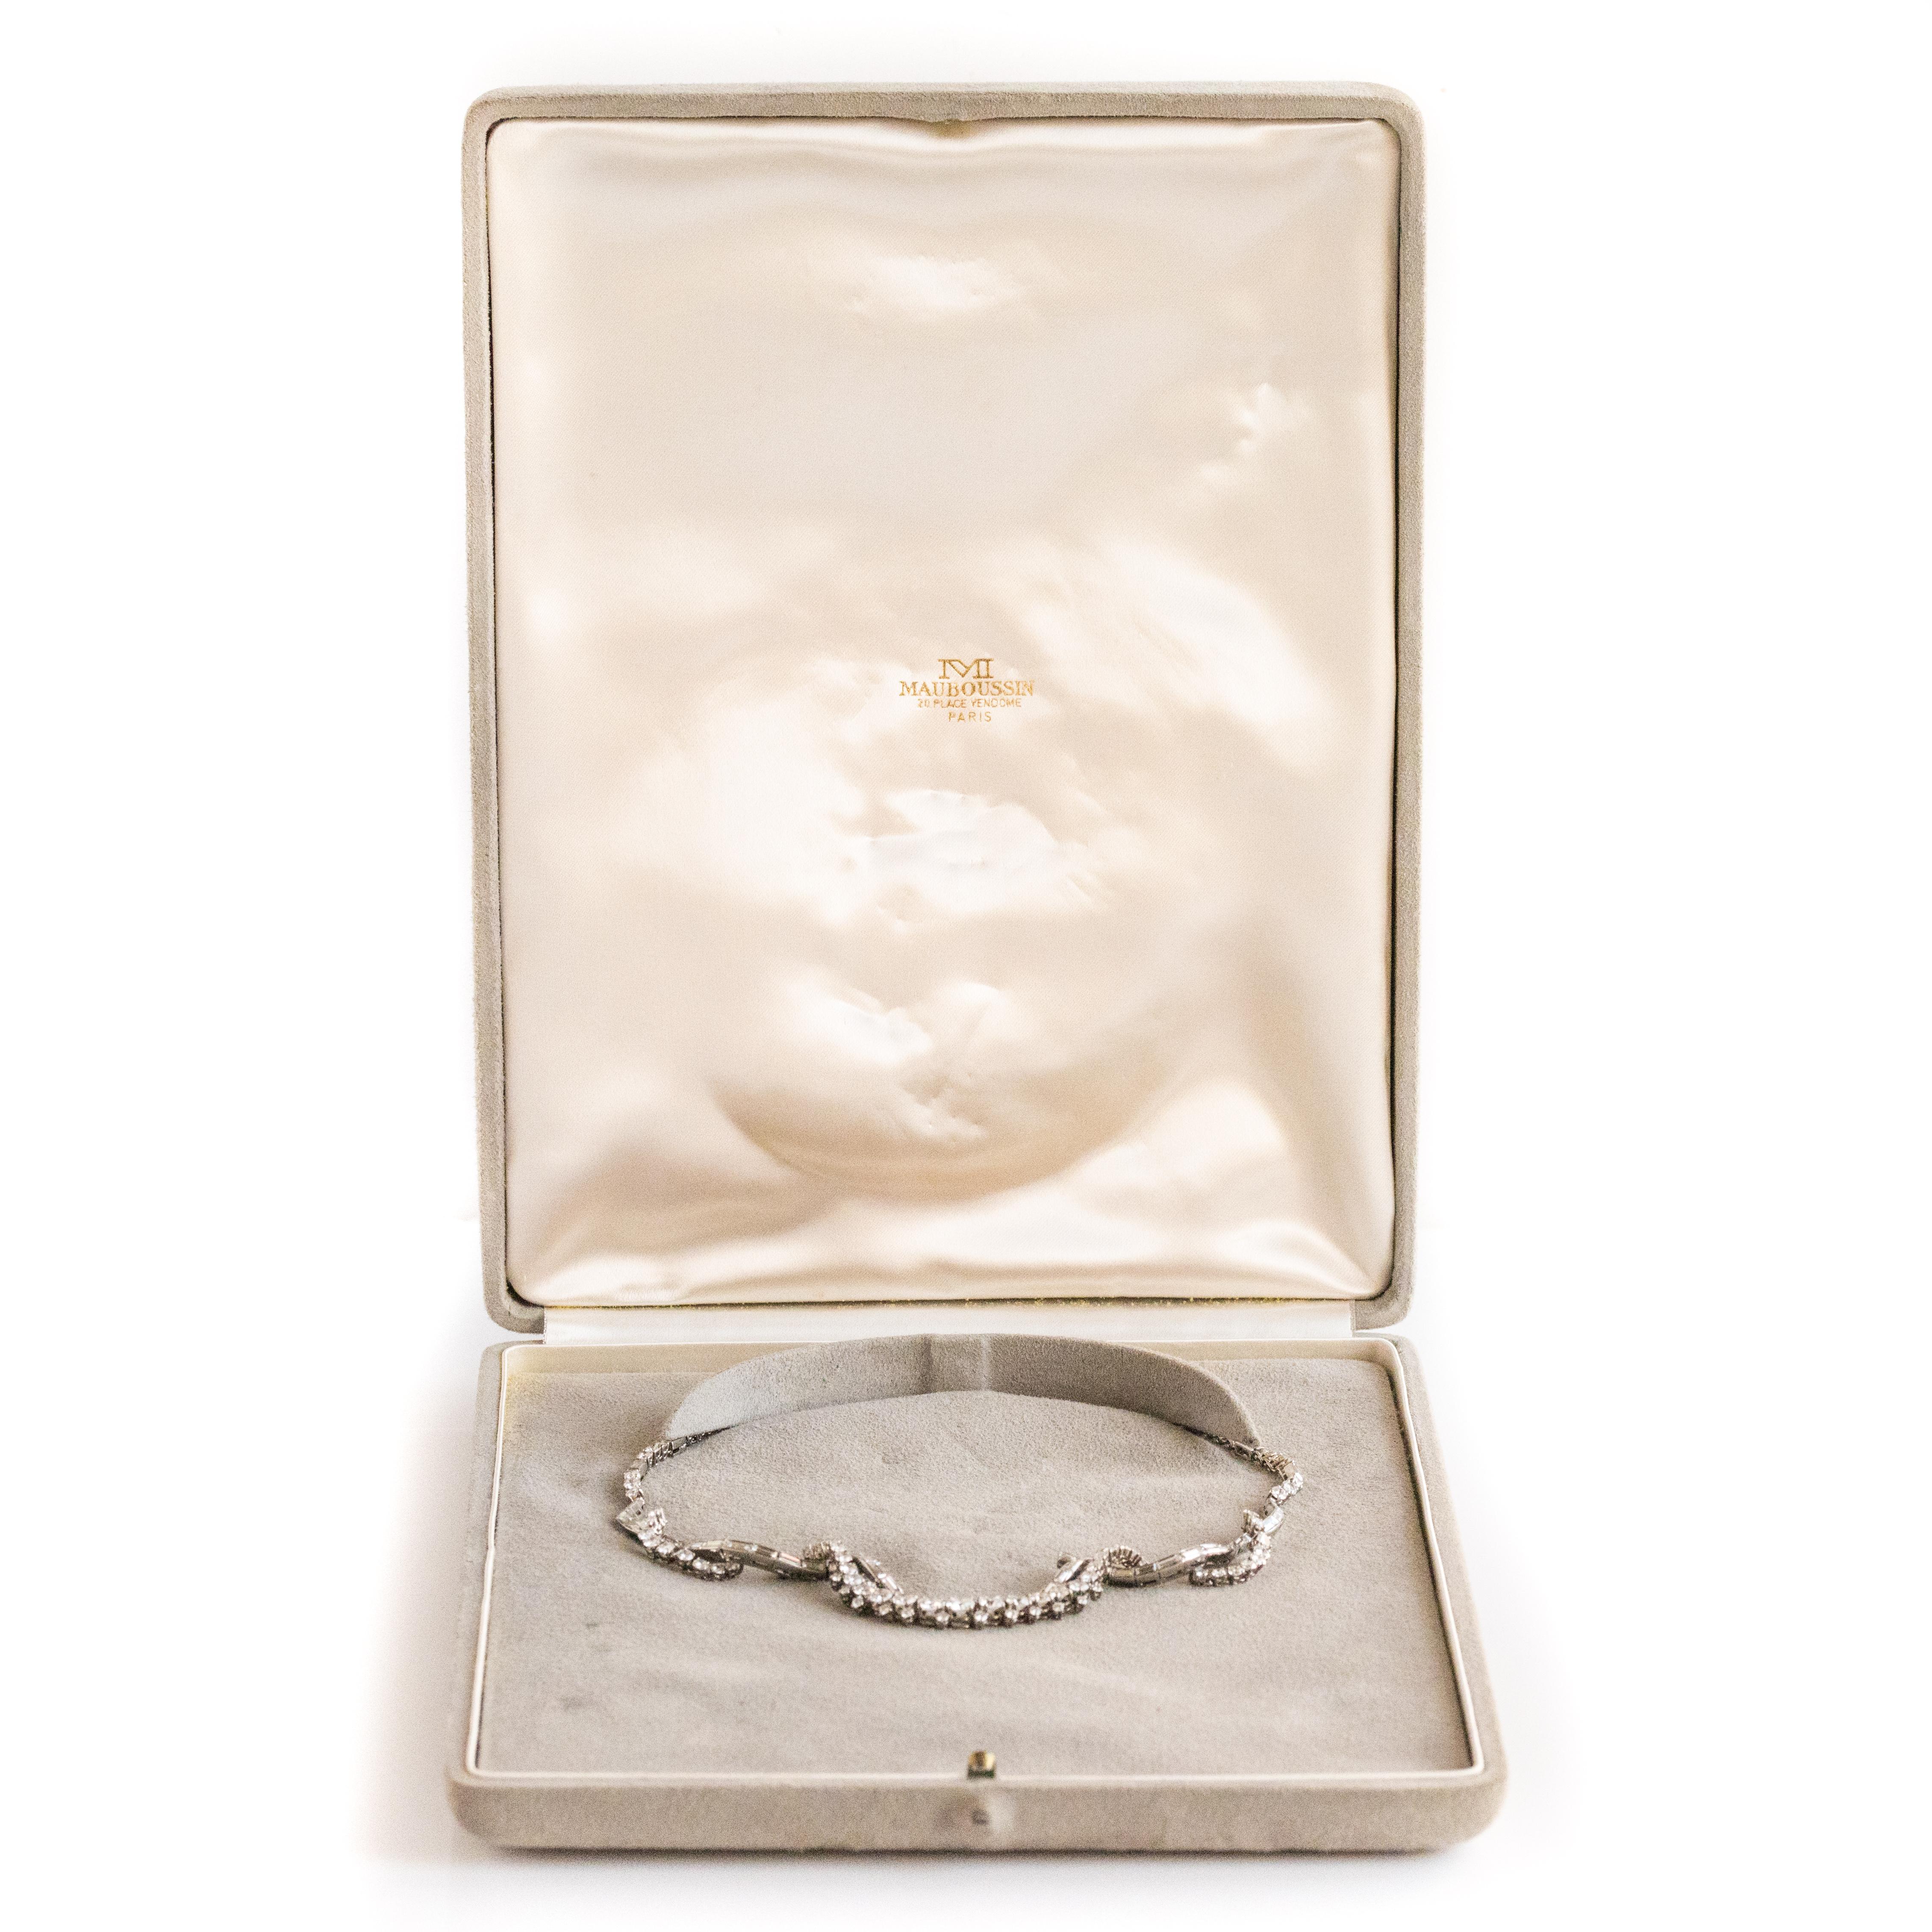 French 1967 Mauboussin 15 Carat Diamonds Platinum 18 Karat White Gold Necklace For Sale 6